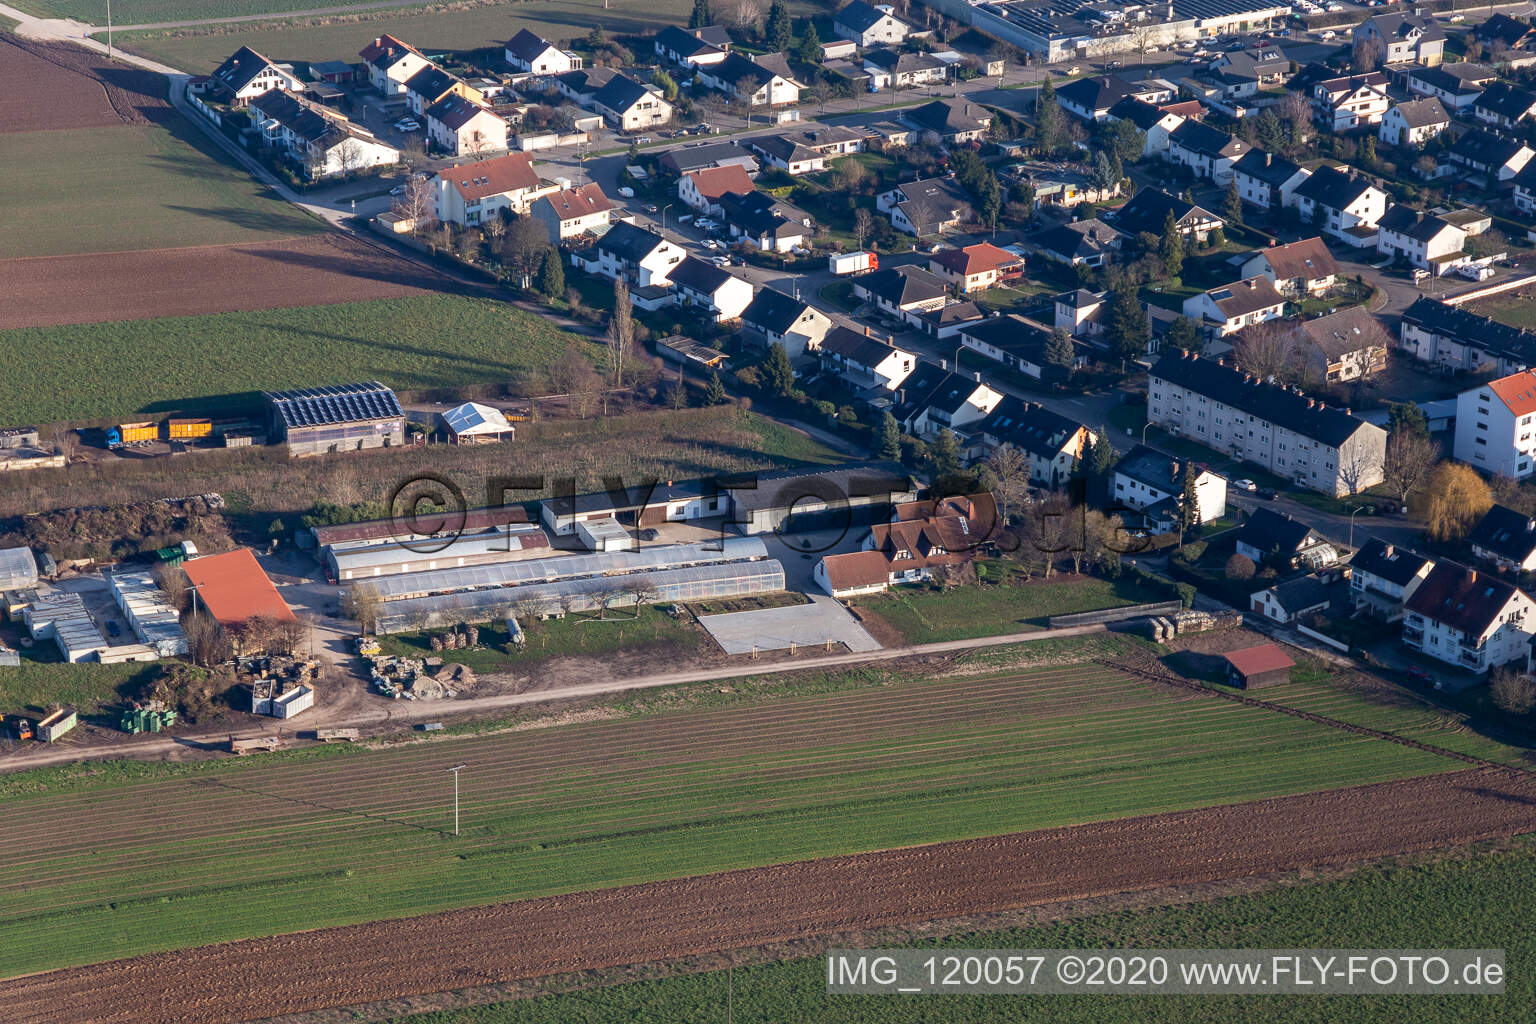 Aerial view of Kasa landscape gardener Kugelmann in Kandel in the state Rhineland-Palatinate, Germany